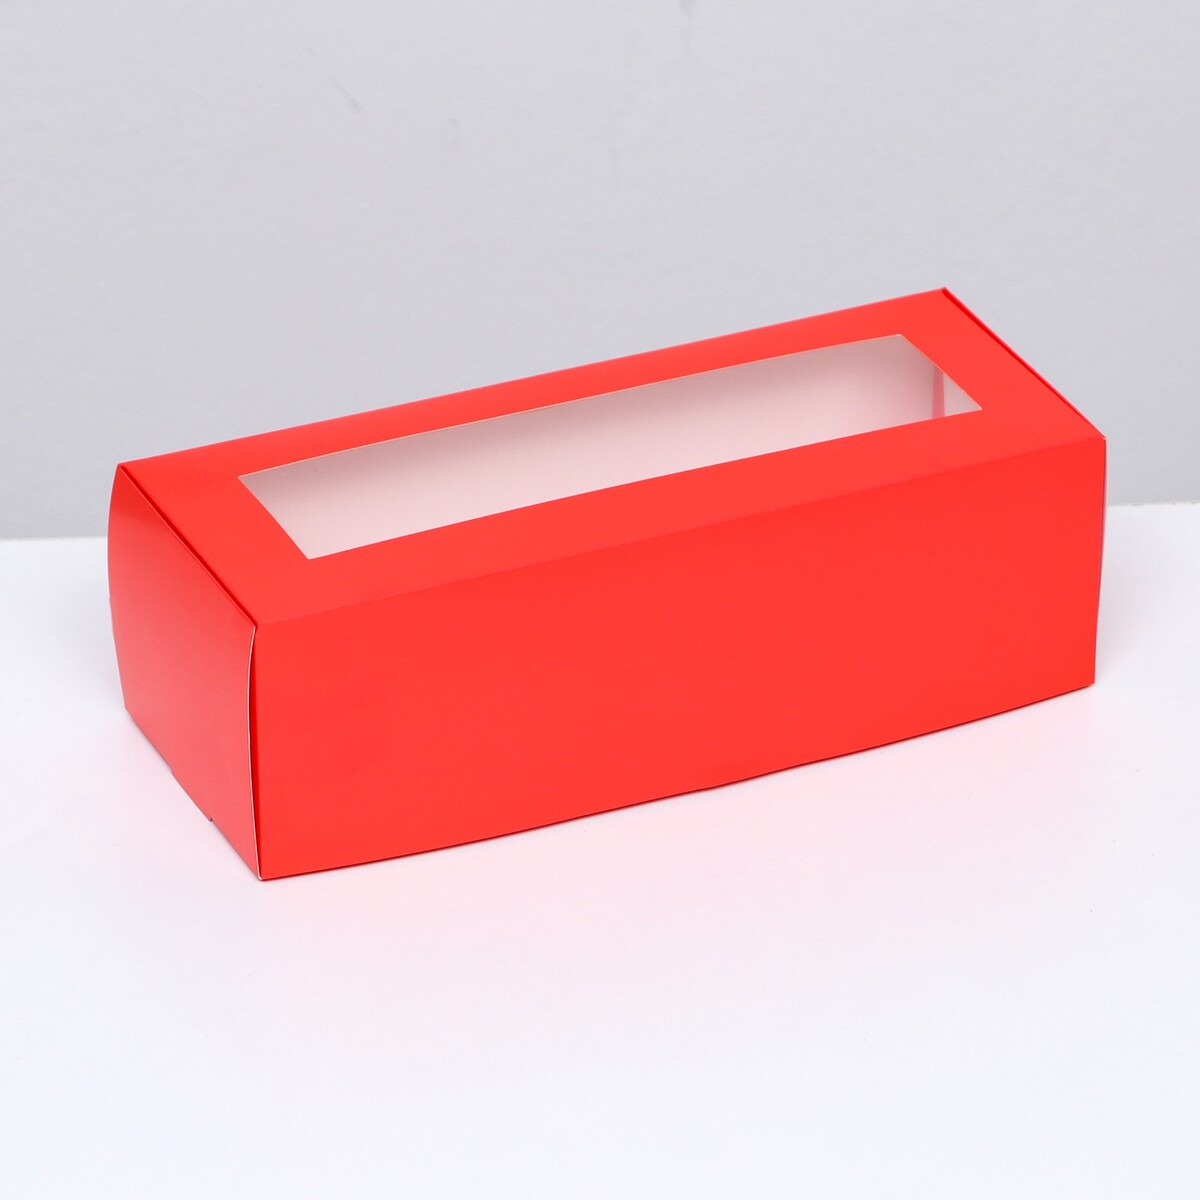 Коробка складная с окном под рулет, красная, 26 х 10 х 8 см коробка под рулет белая 18 5 х 6 5 х 6 5 см